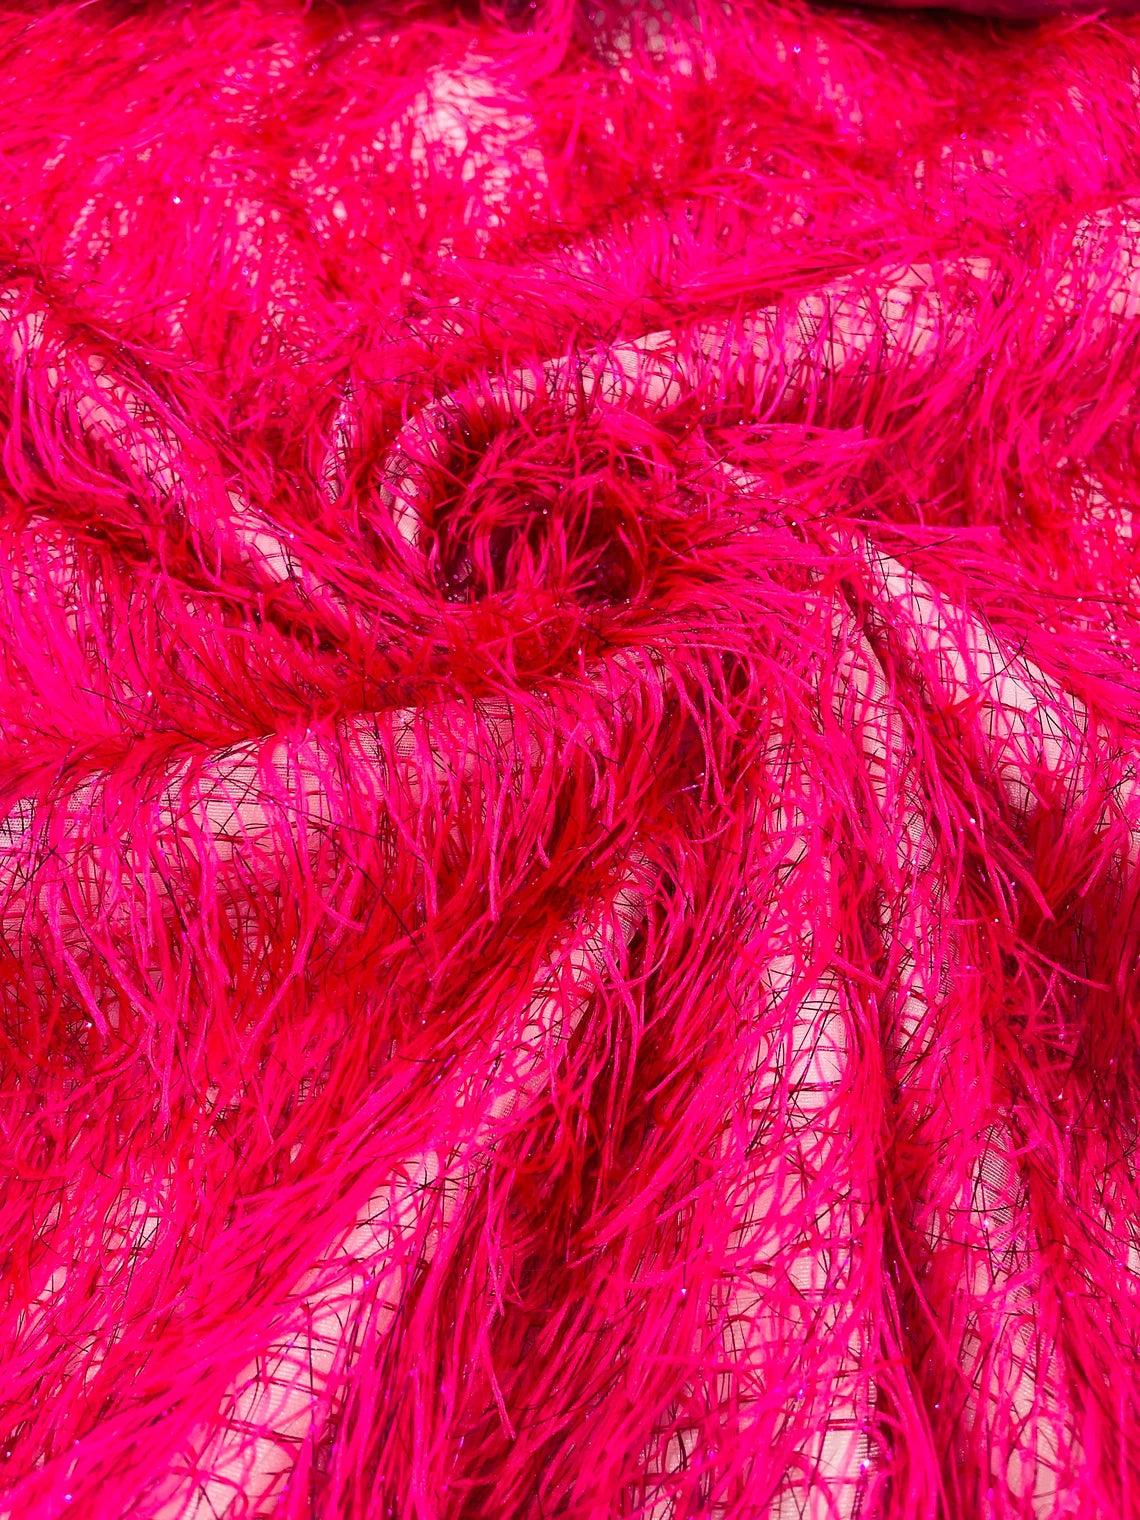 Eyelash Fringe Metallic Fabric - Hot Pink - Hanging Fringe Metallic Decorative Crafts Dress Fabric By Yard